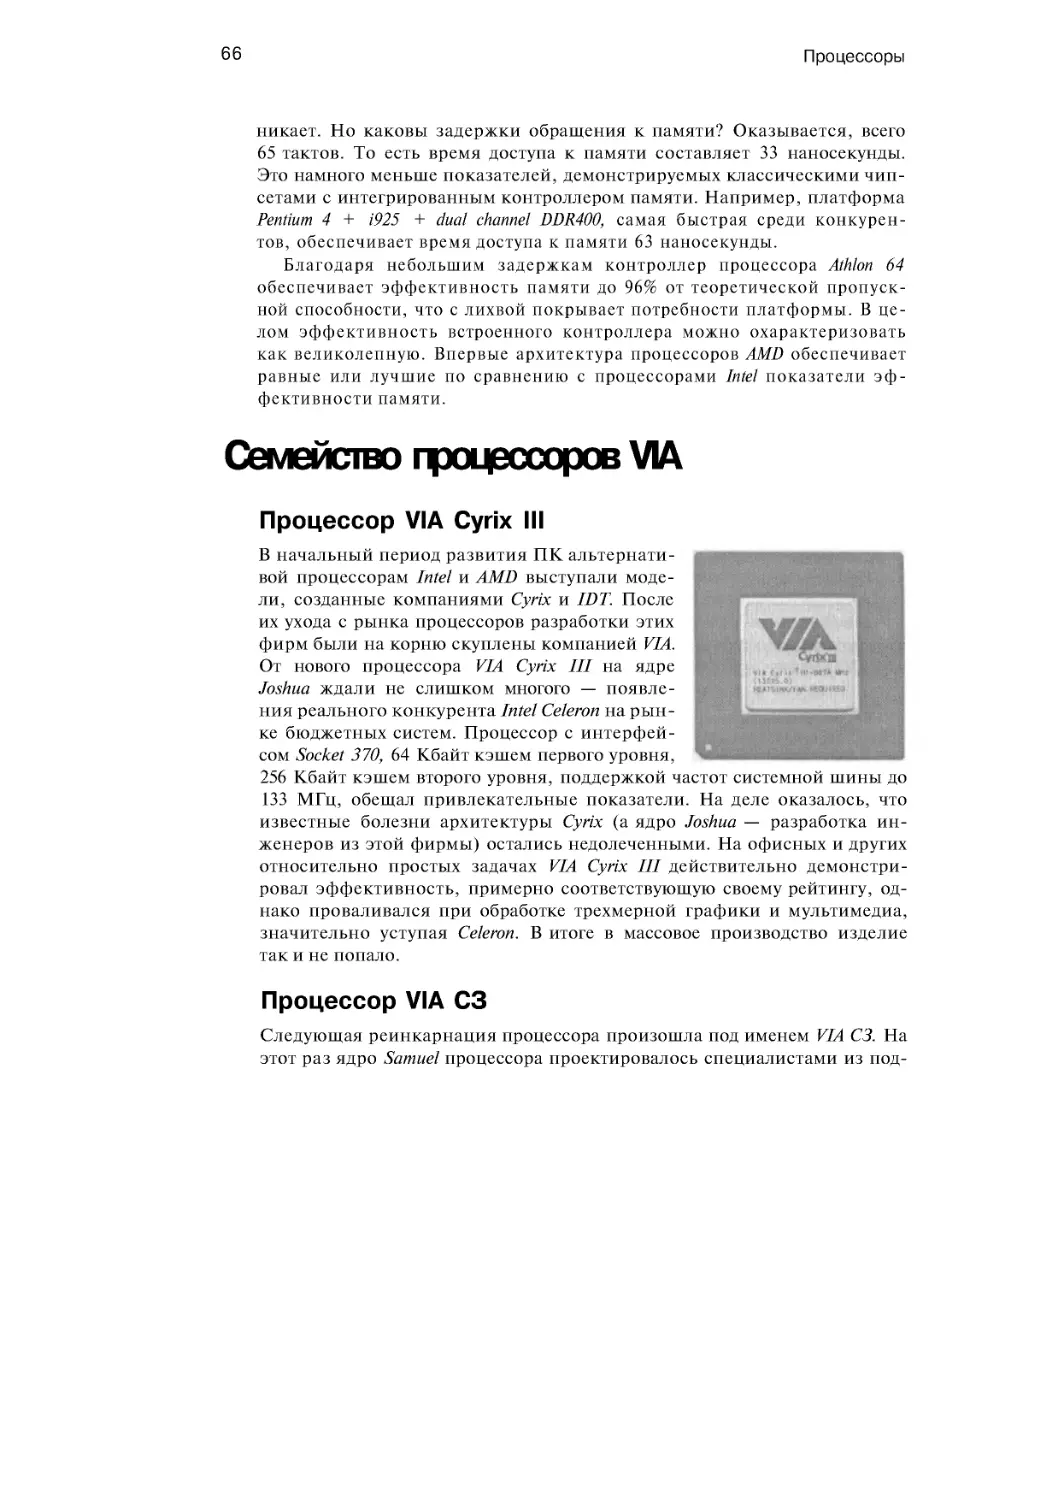 ﻿Семейство процессоров VI
﻿Процессор VIA С